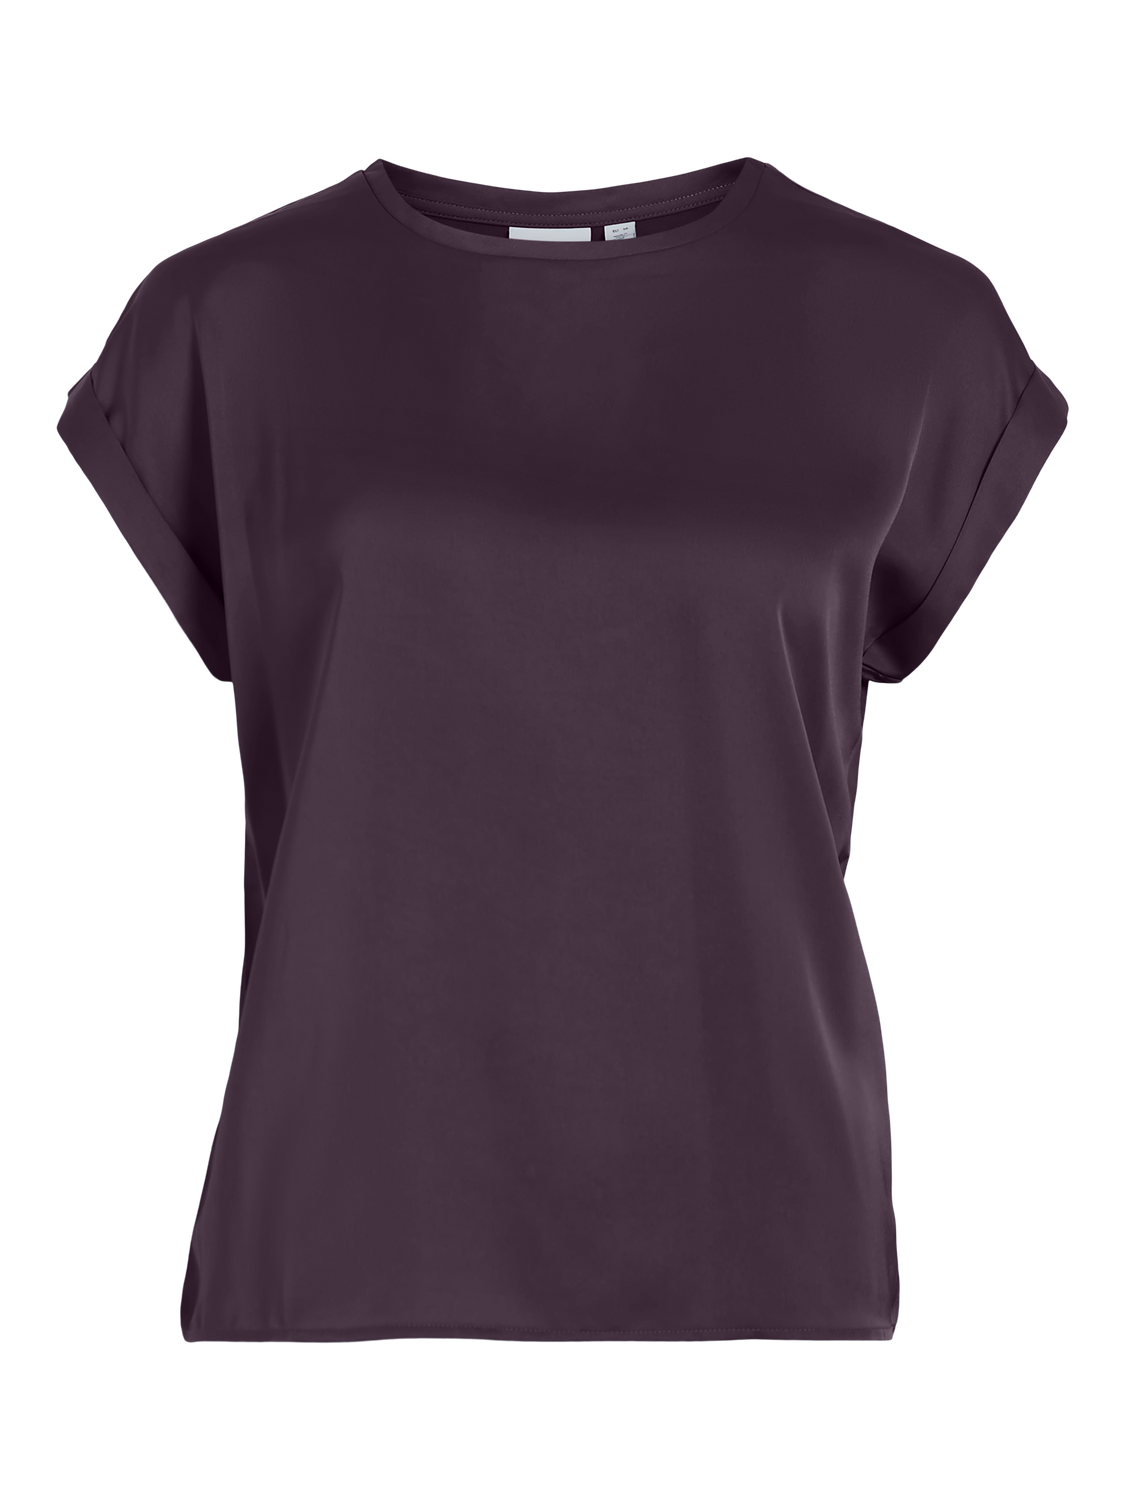 VIELLETTE T-Shirts & Tops - Plum Perfect